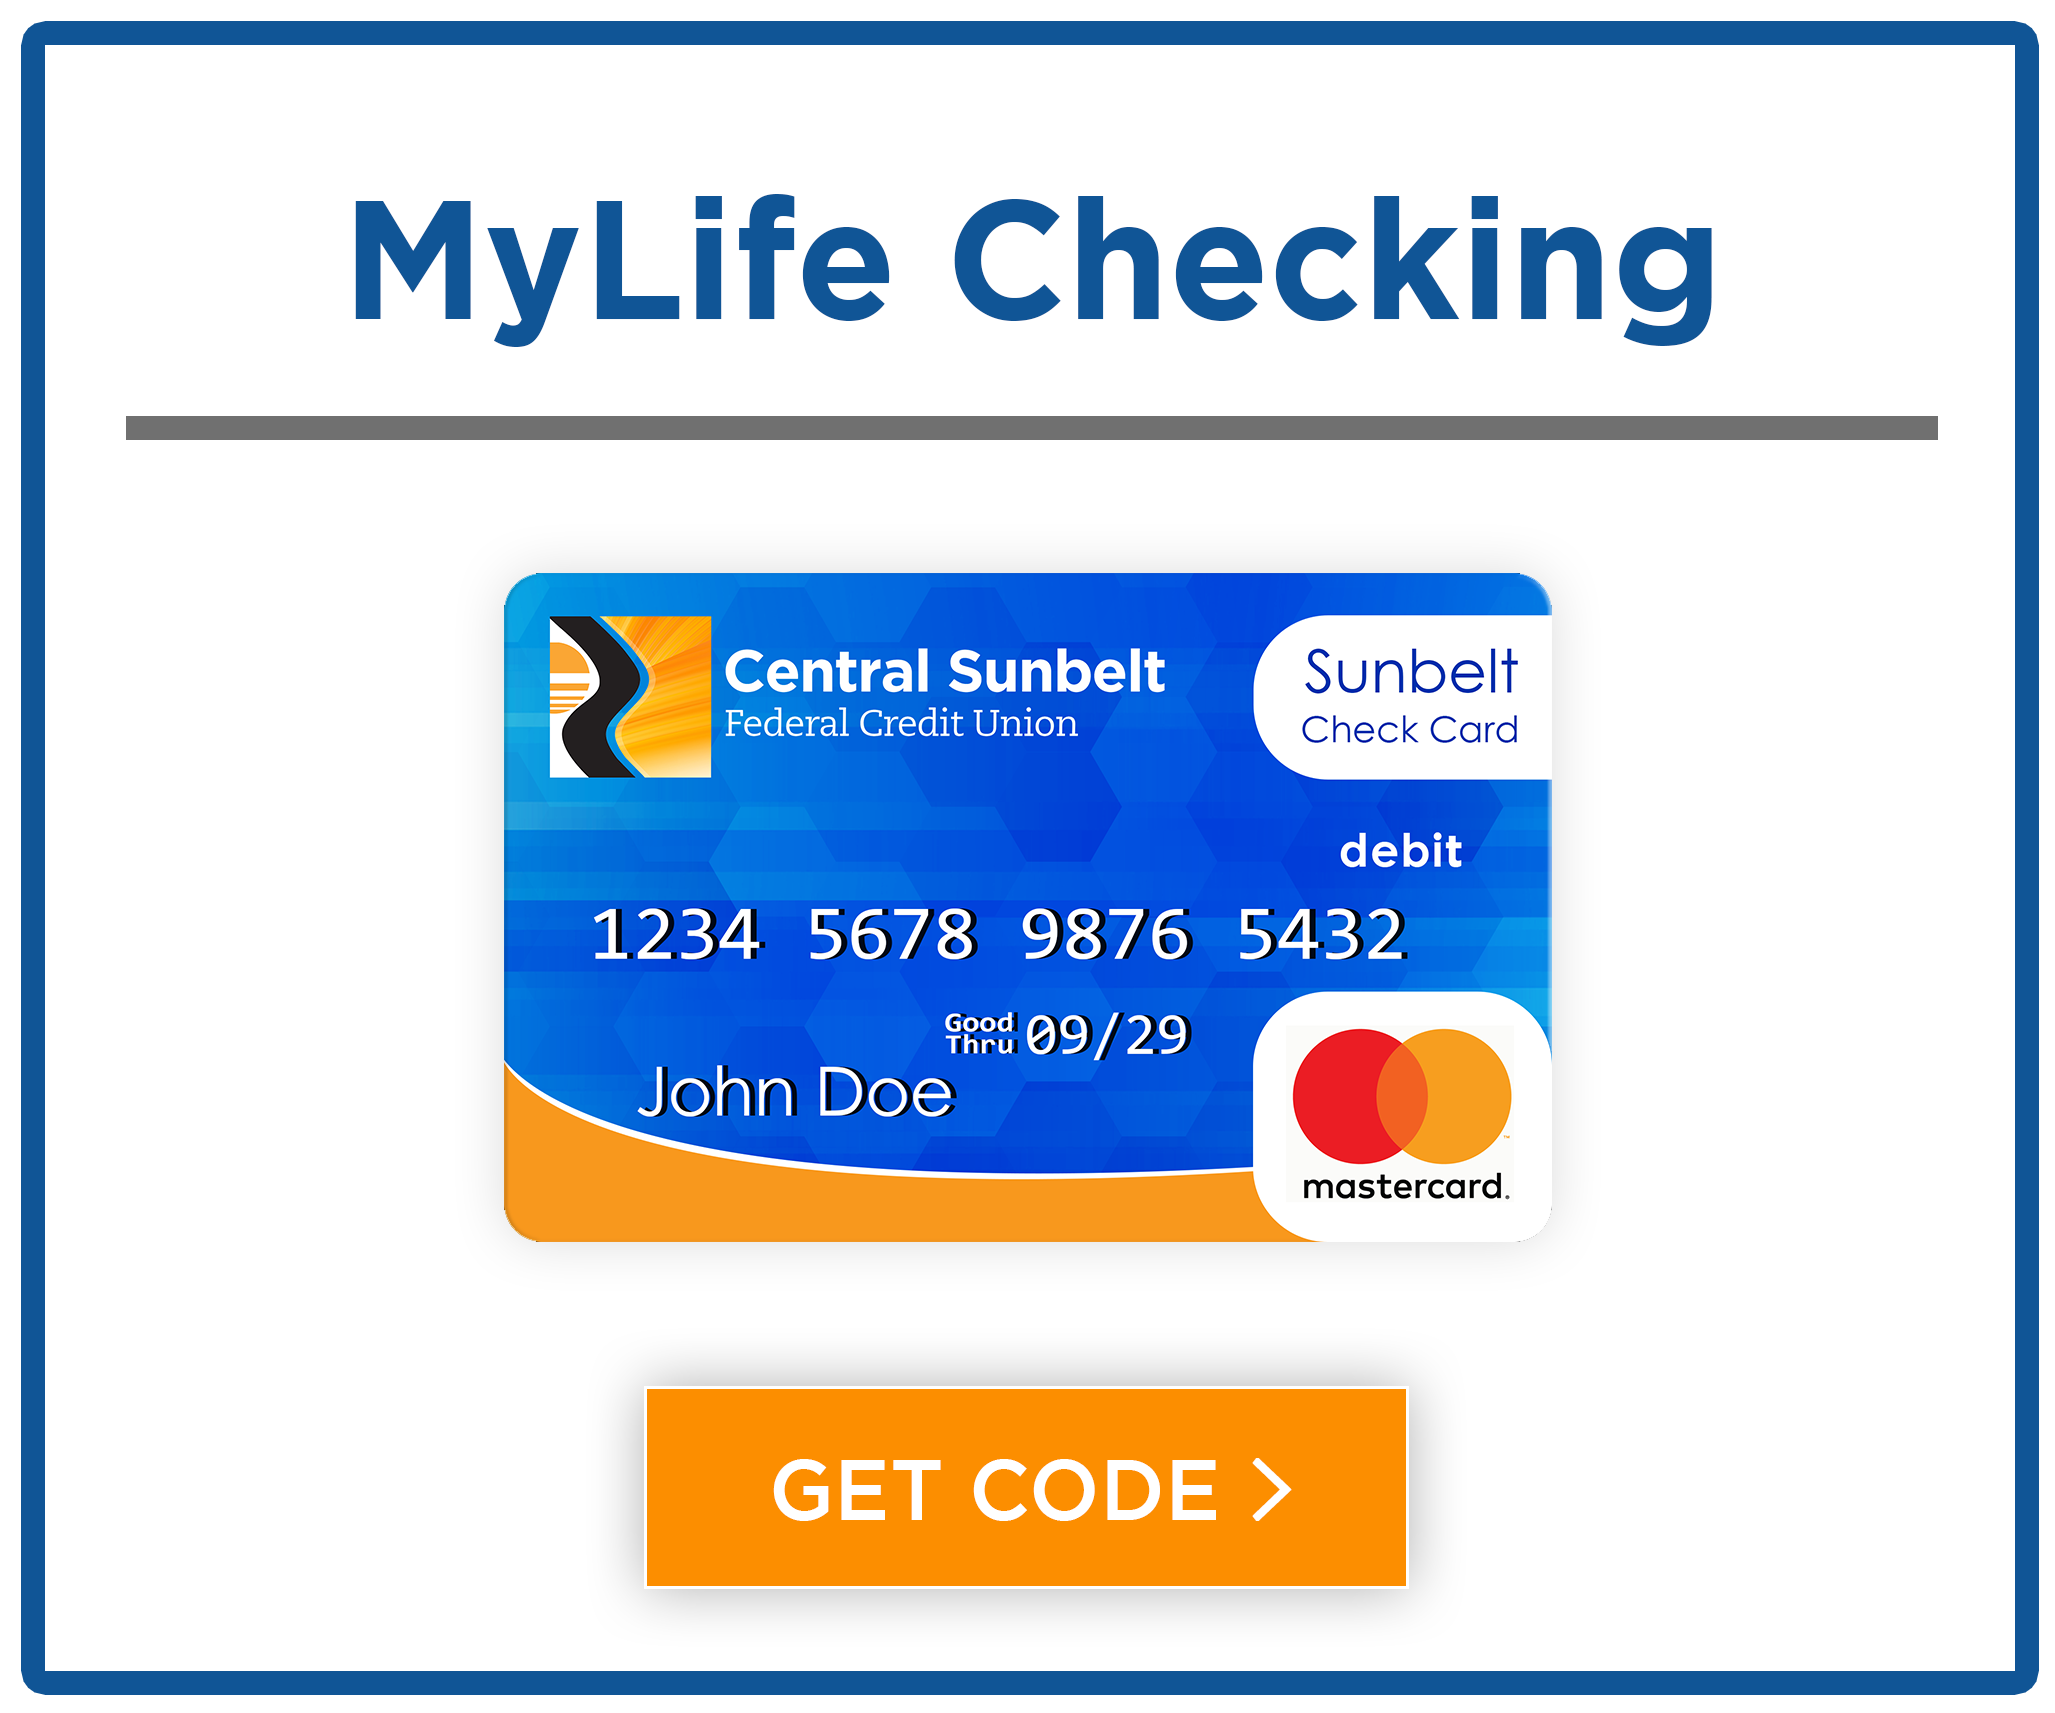 MyLife Checking - Sunbelt Check Card